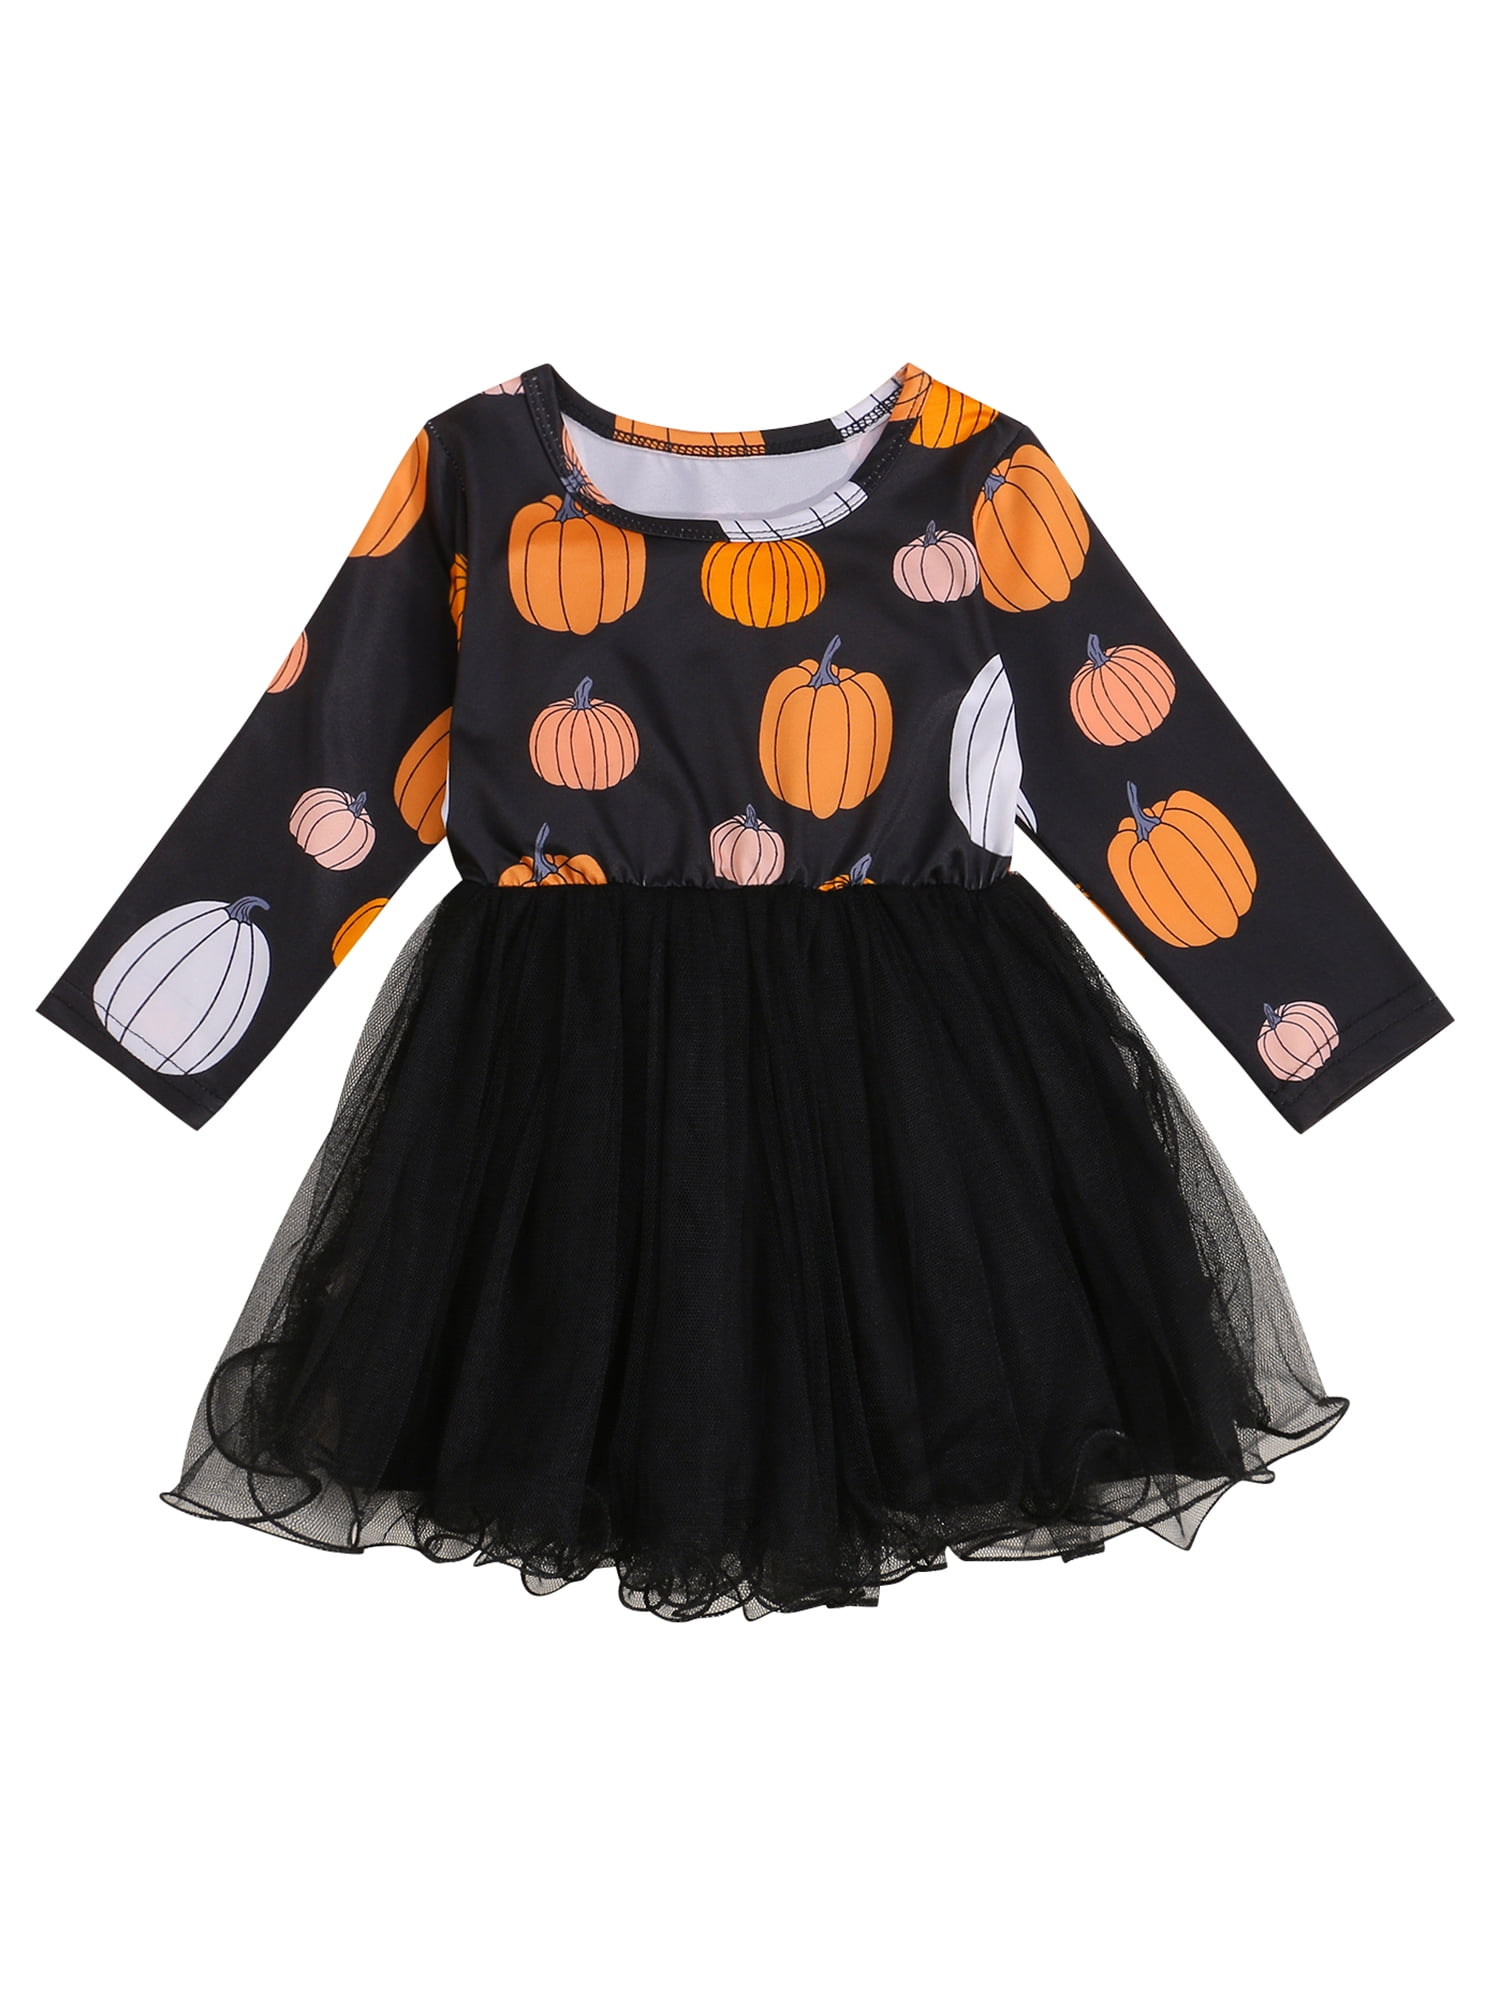 # 32 Custom Handmade Disney Minnie Mouse Dress/Halloween costume sz 6mo-5Y 